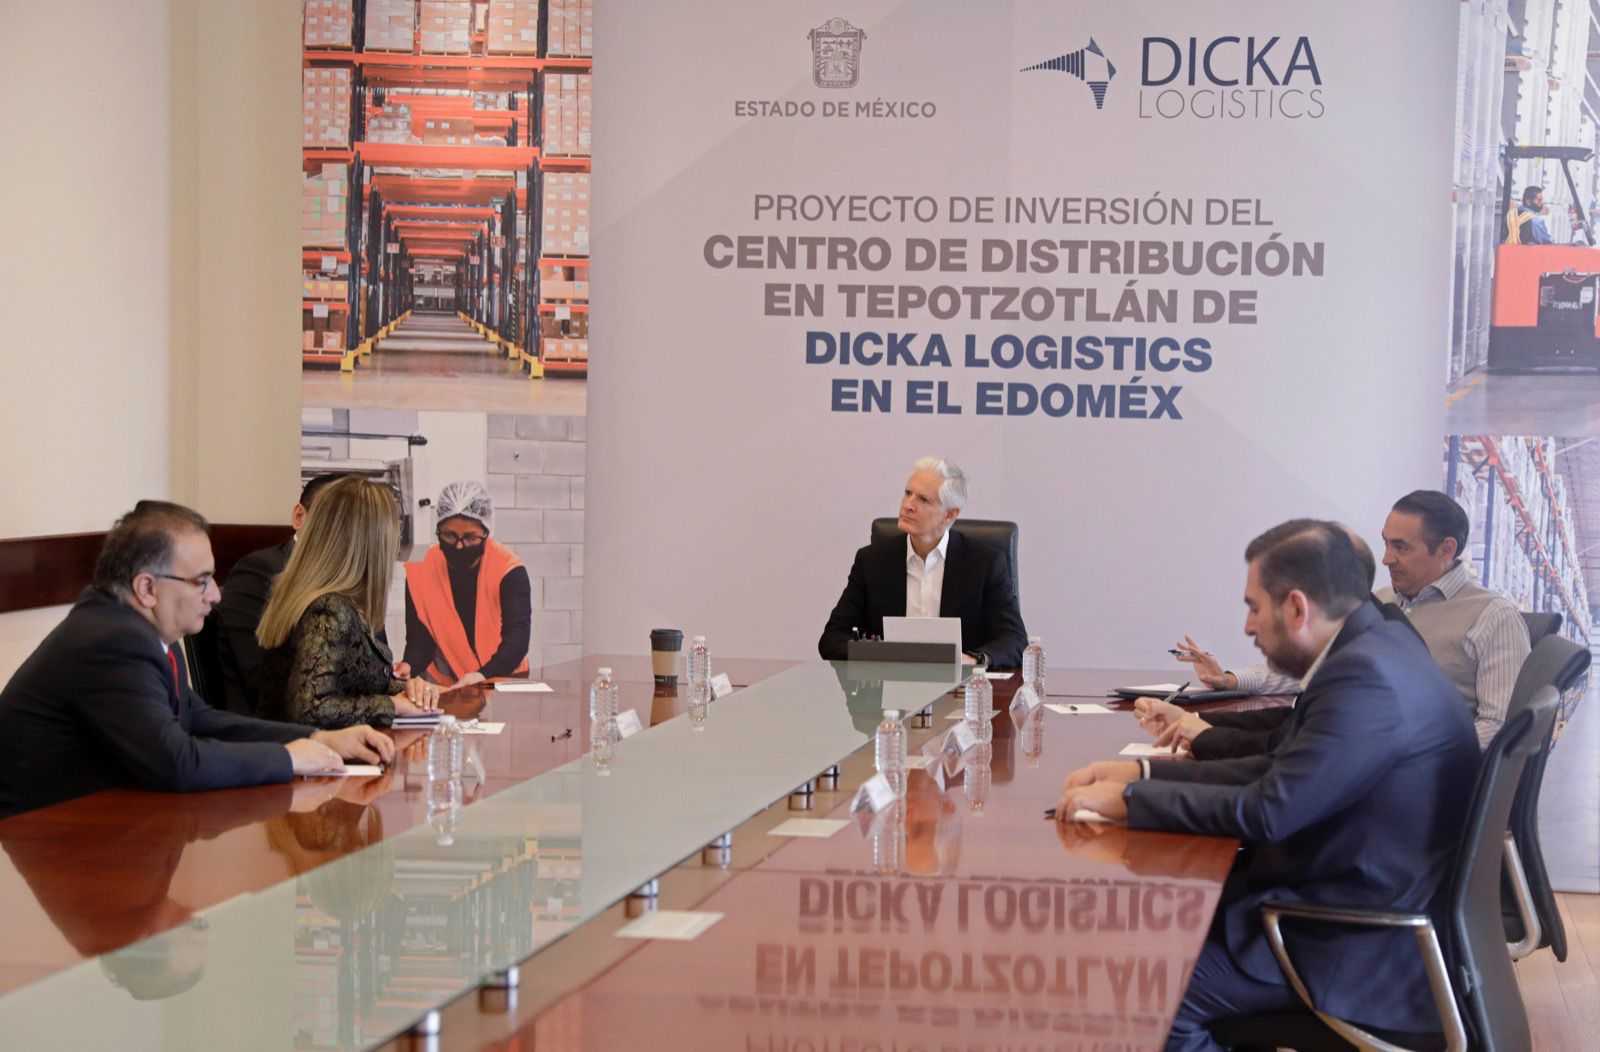 Dicka Logistics expands distribution center in Toluca